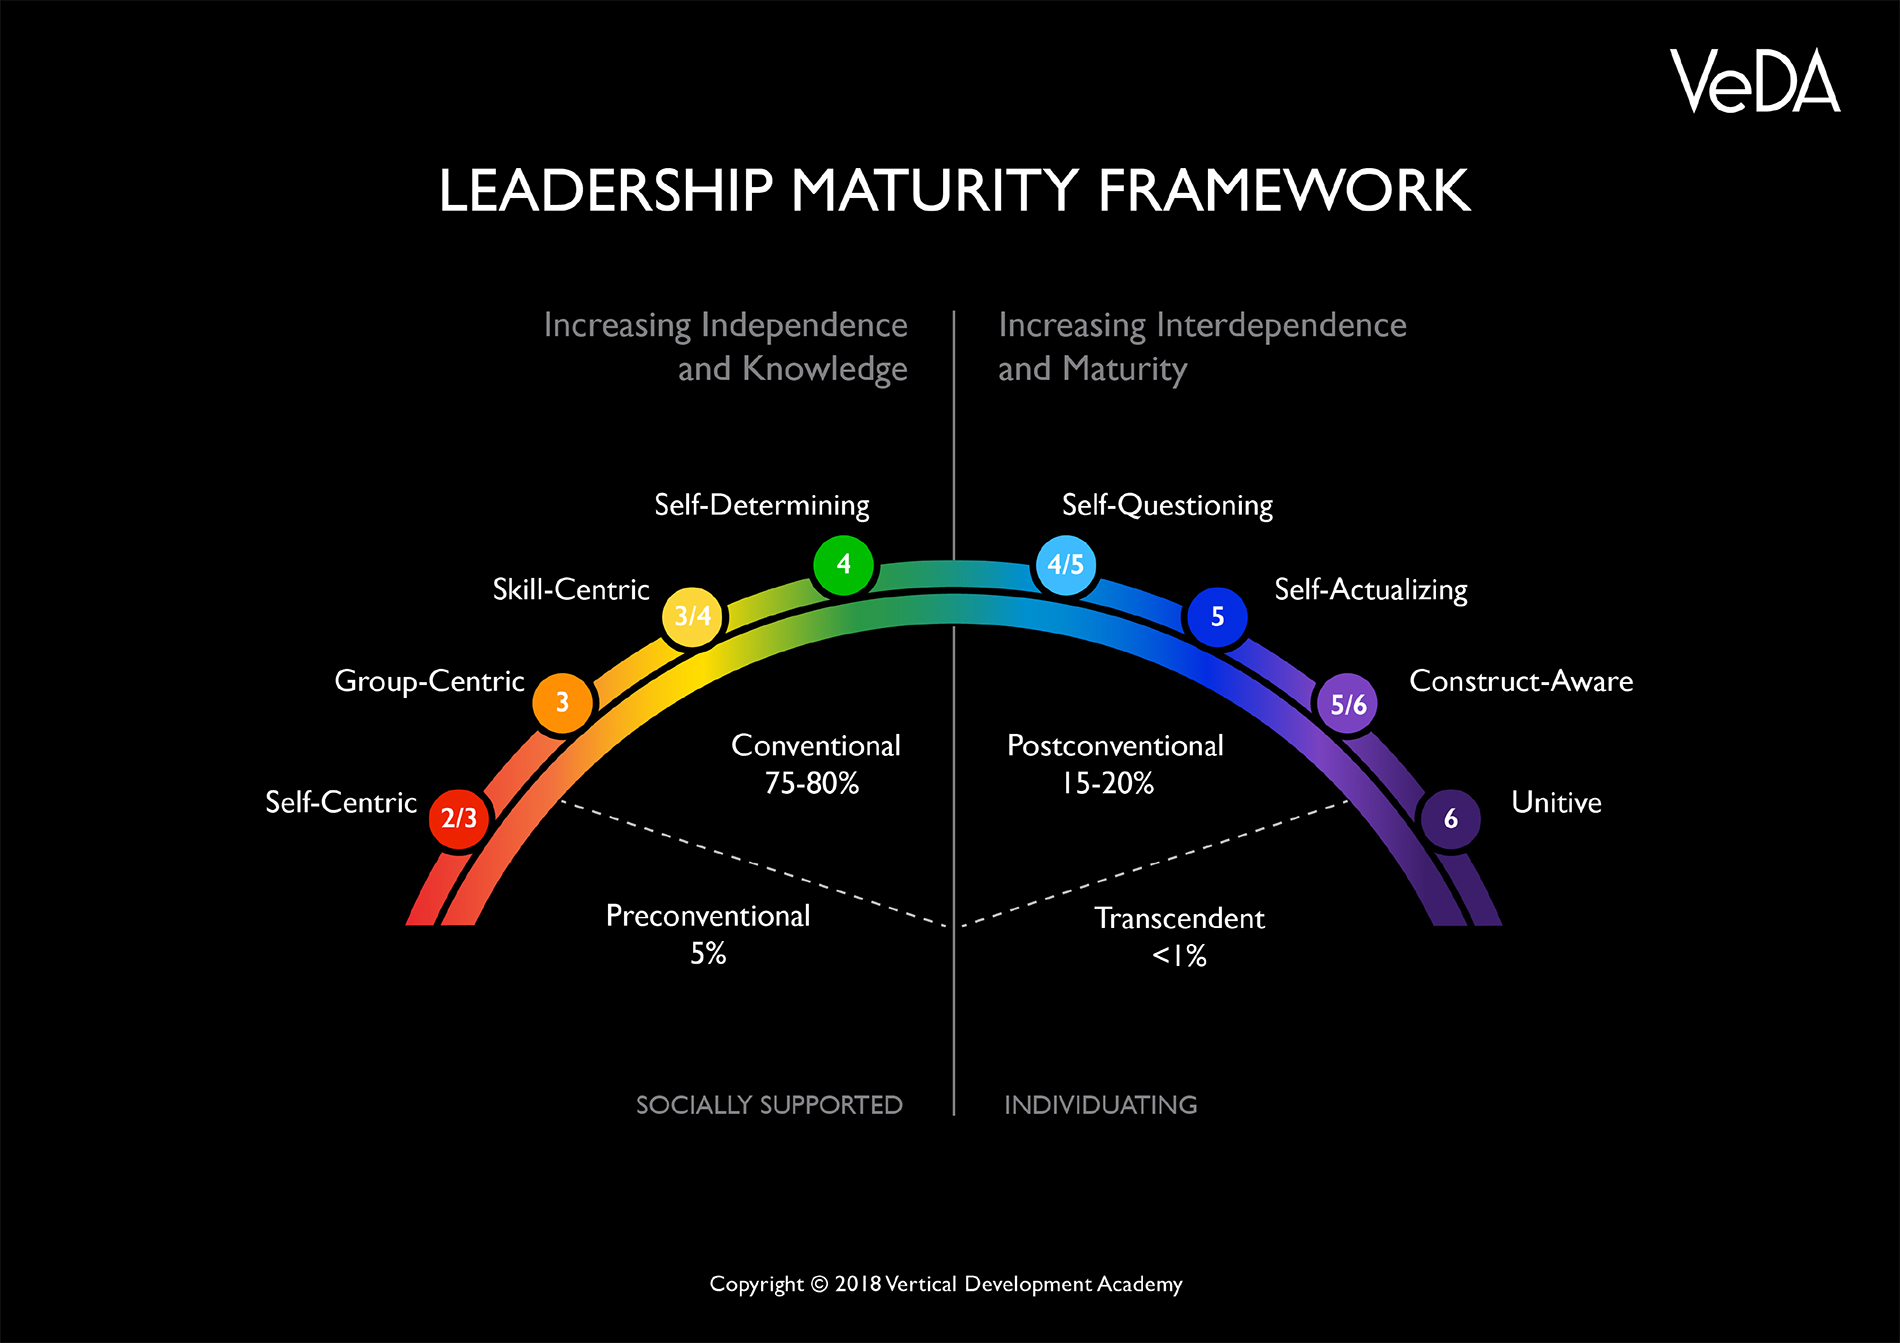 Leadership-Maturity-Framework-by-VeDA-1.